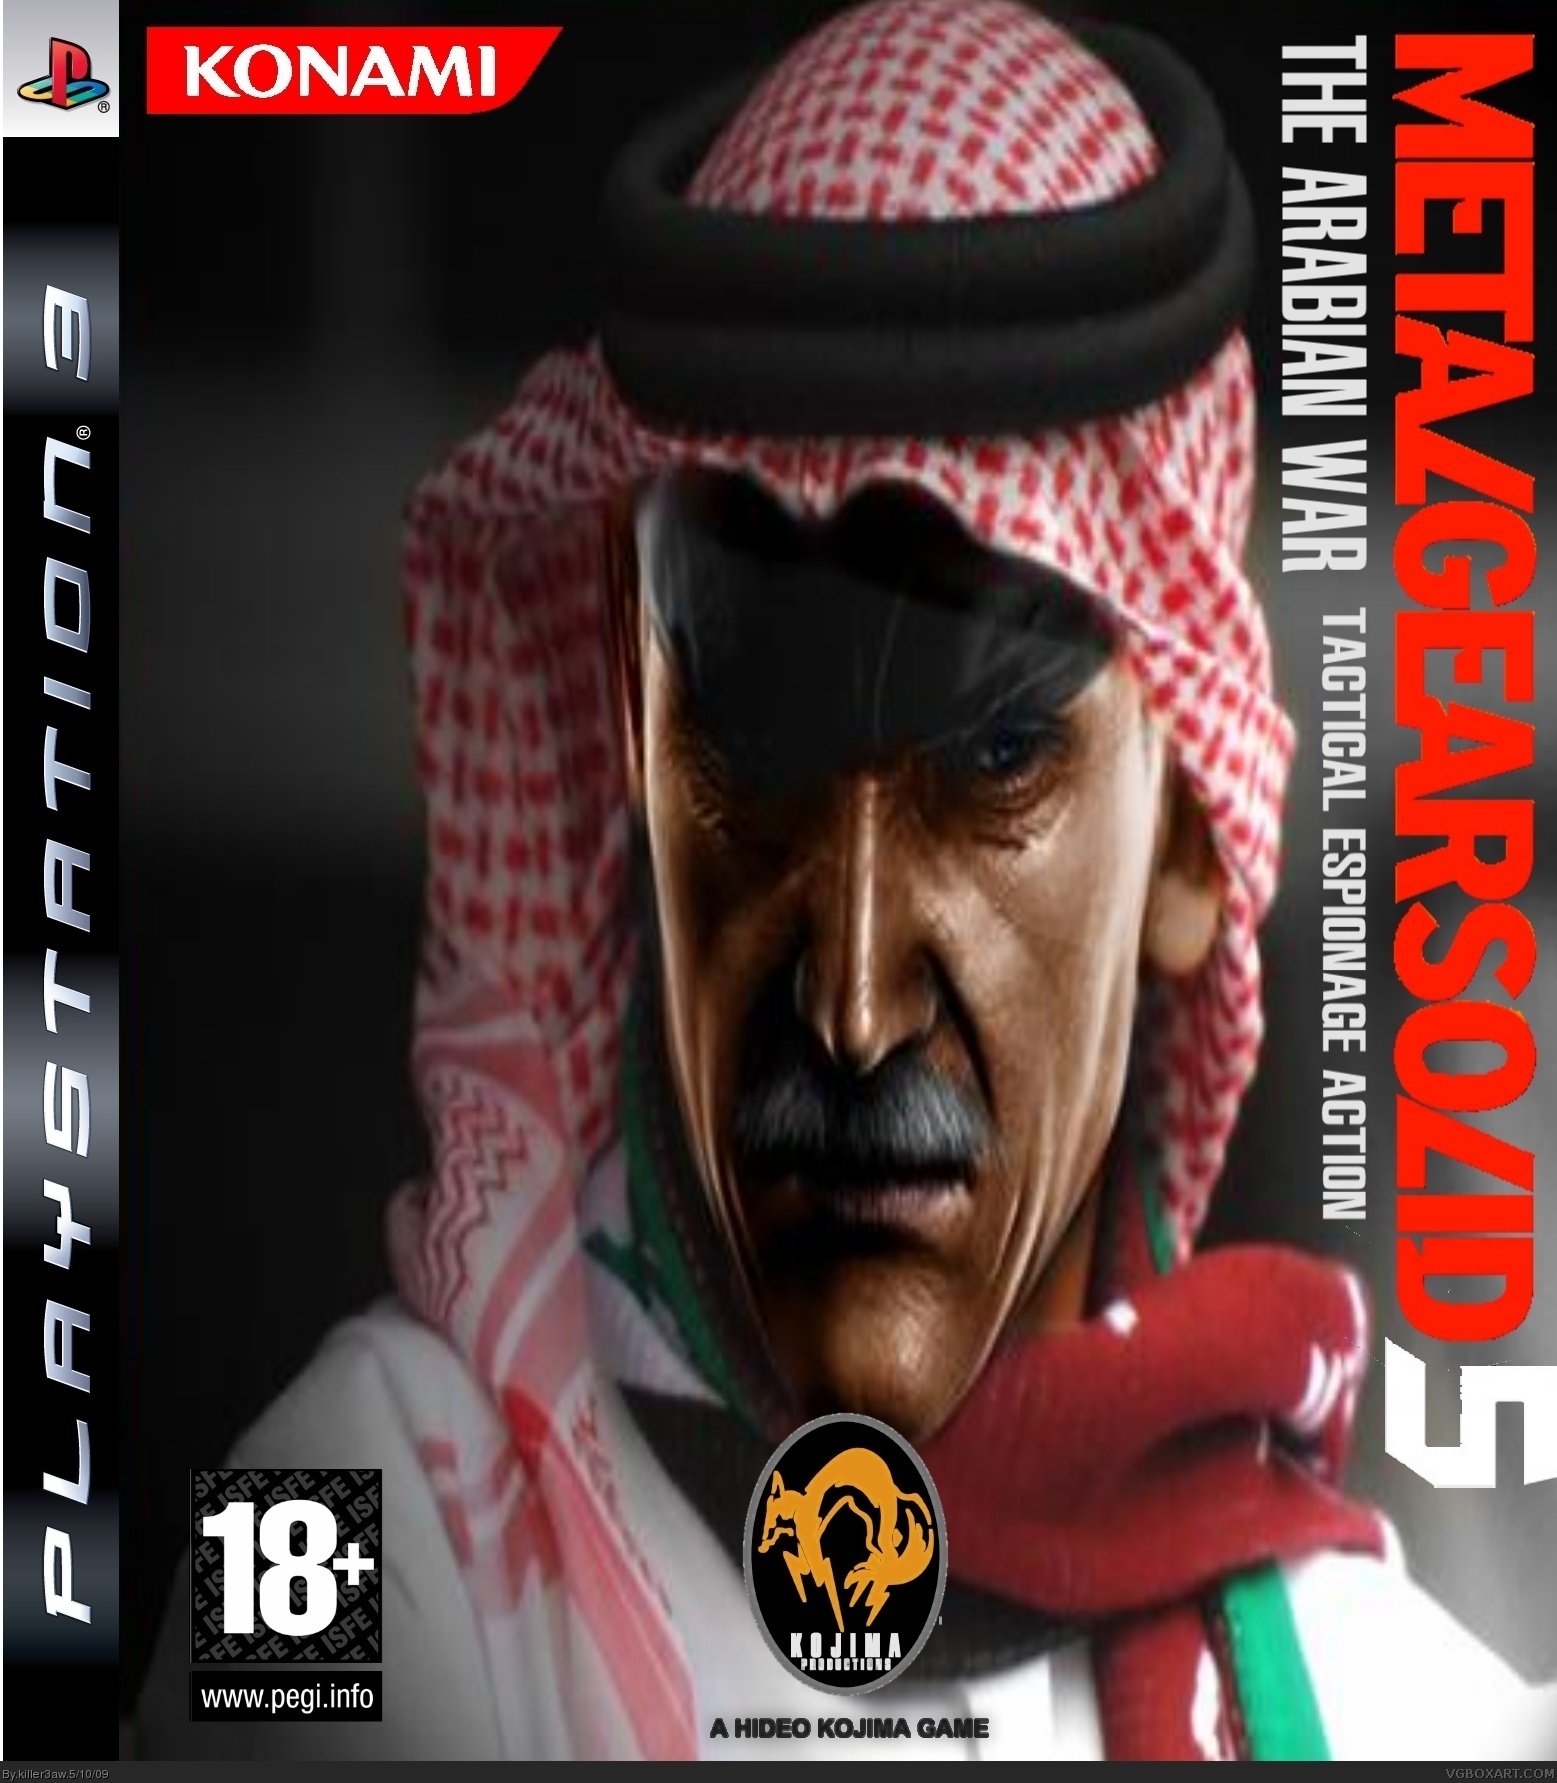 Metal Gear Solid 5 The Arabian war box cover